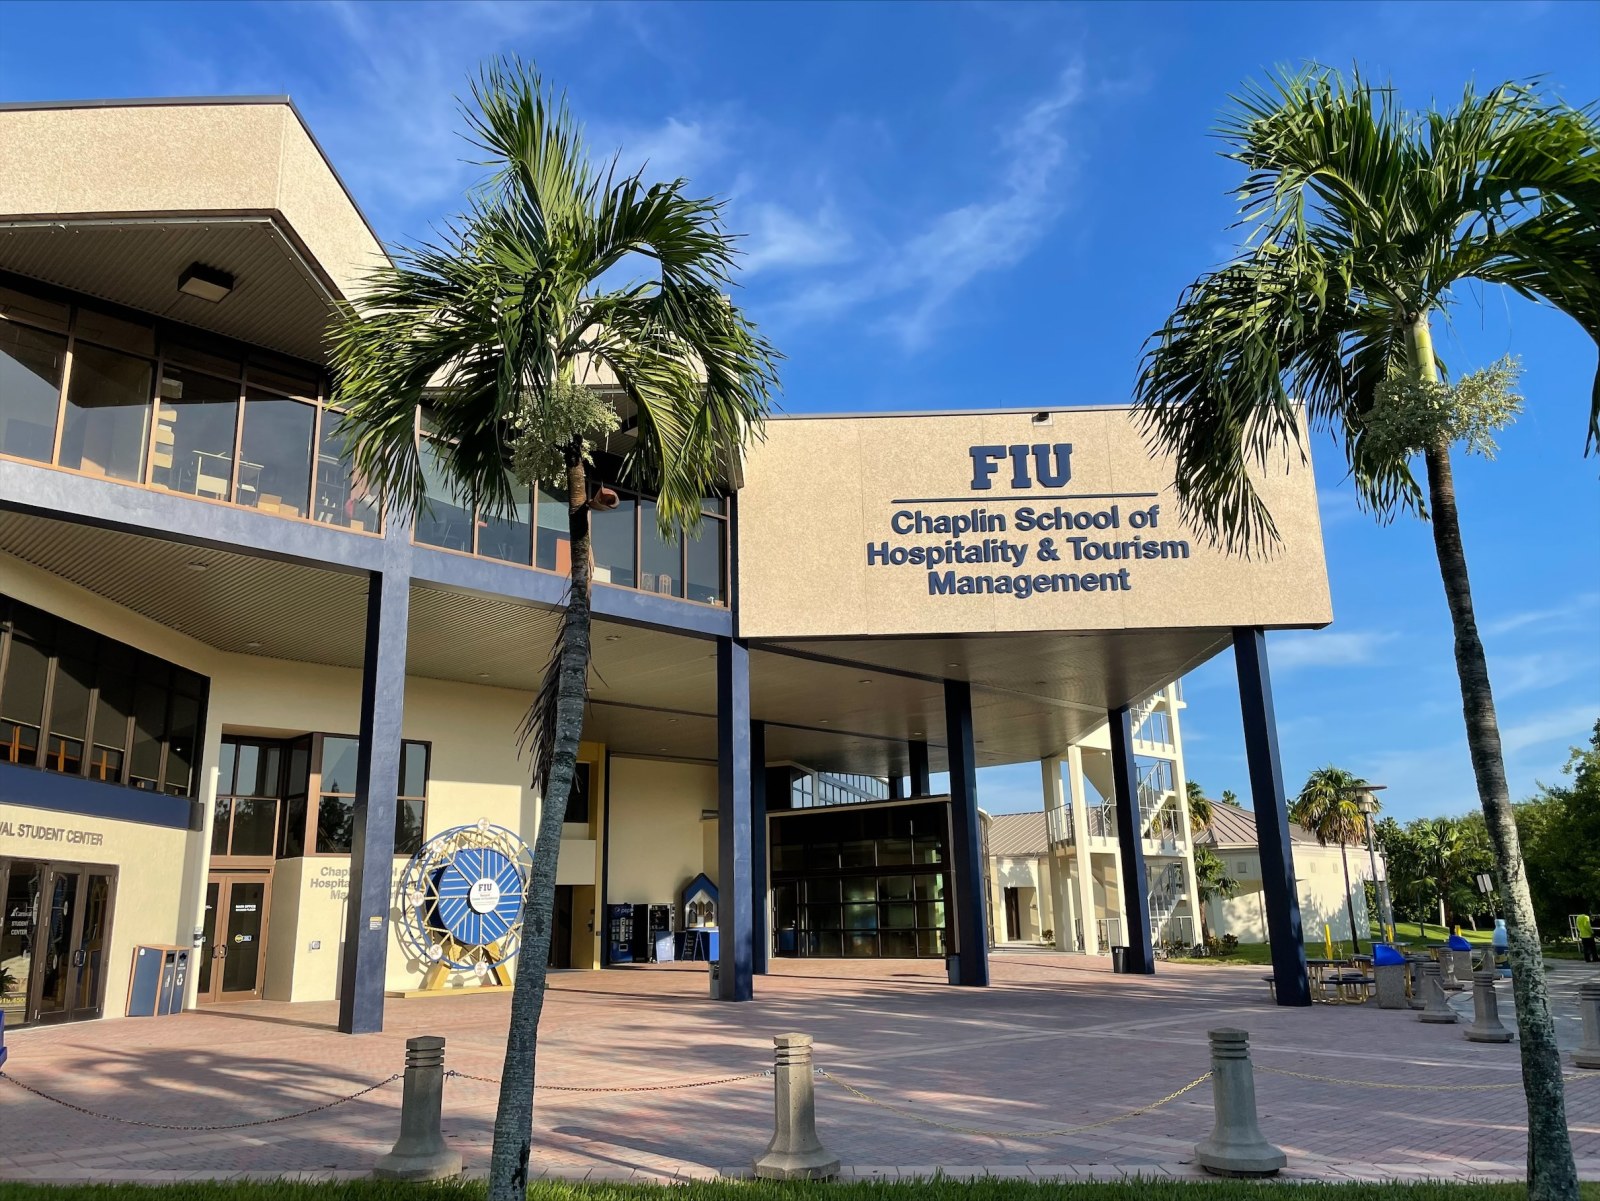 The Chaplin School of Hospitality & Tourism Management at Florida International University (FIU)